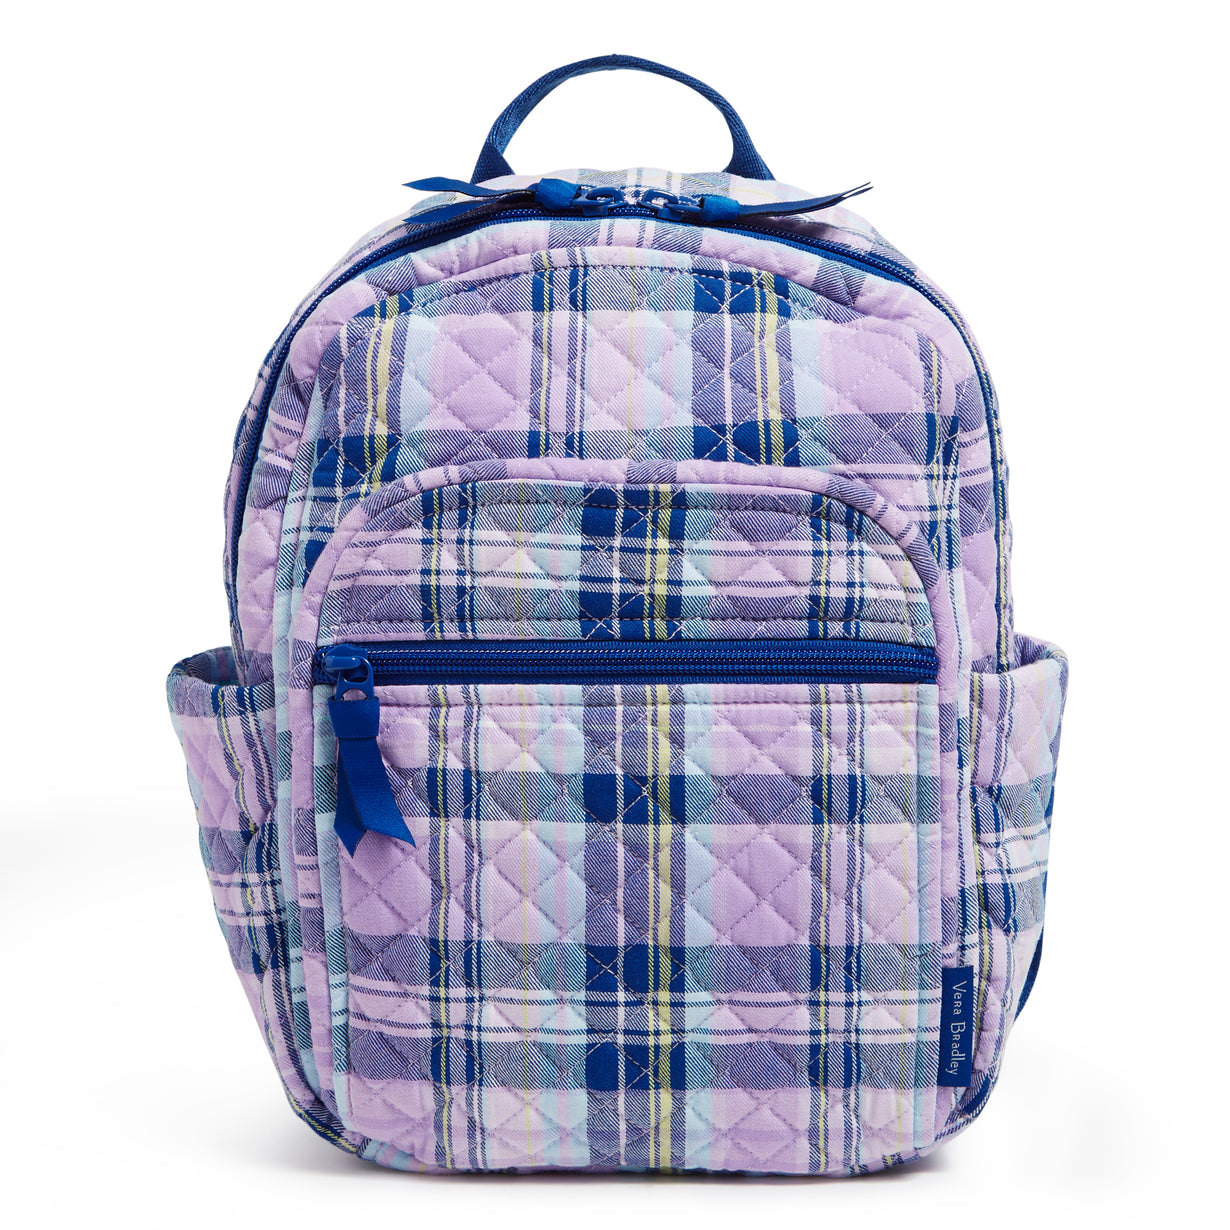 Vera Bradley Small Backpack In Amethyst Plaid Pattern.